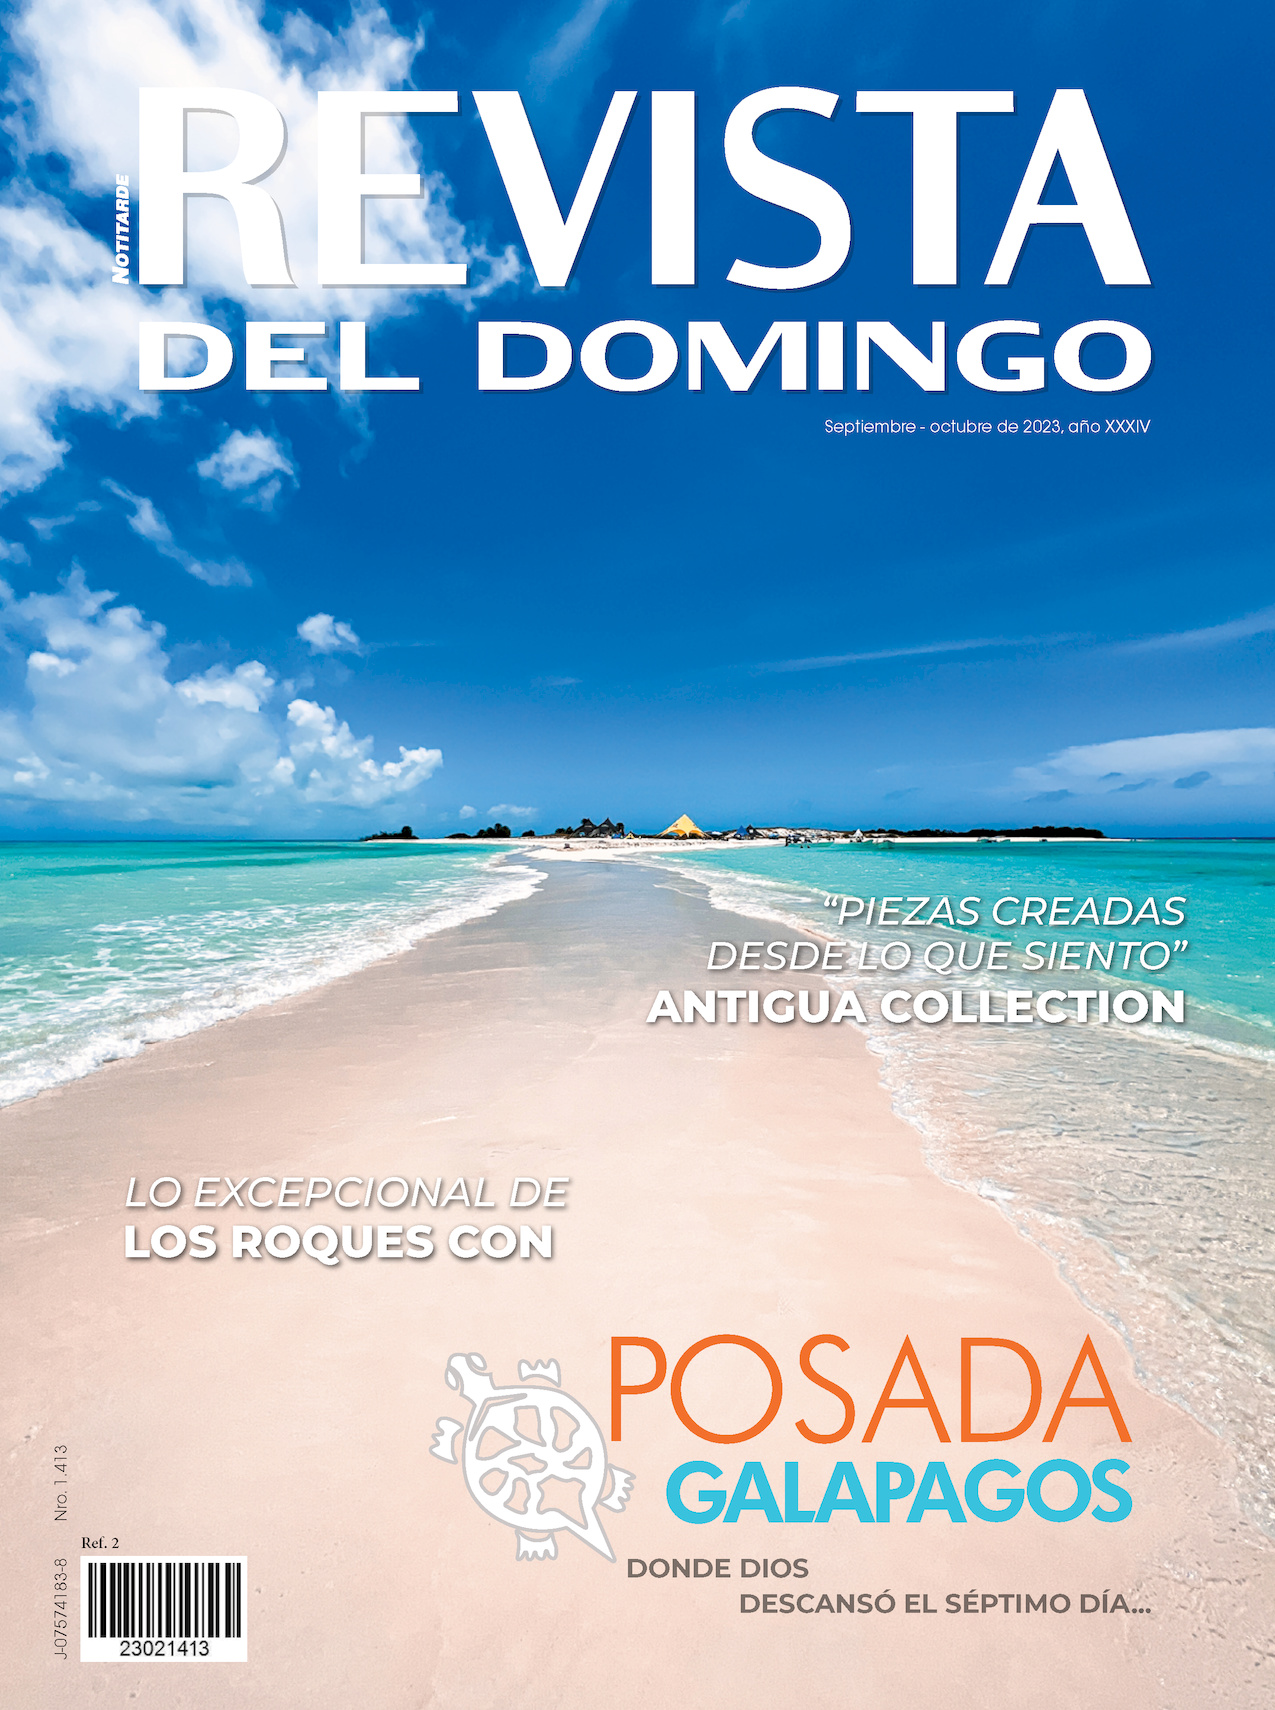 93-REV NT Revista del Domingo 2023 08 27 Pag 93